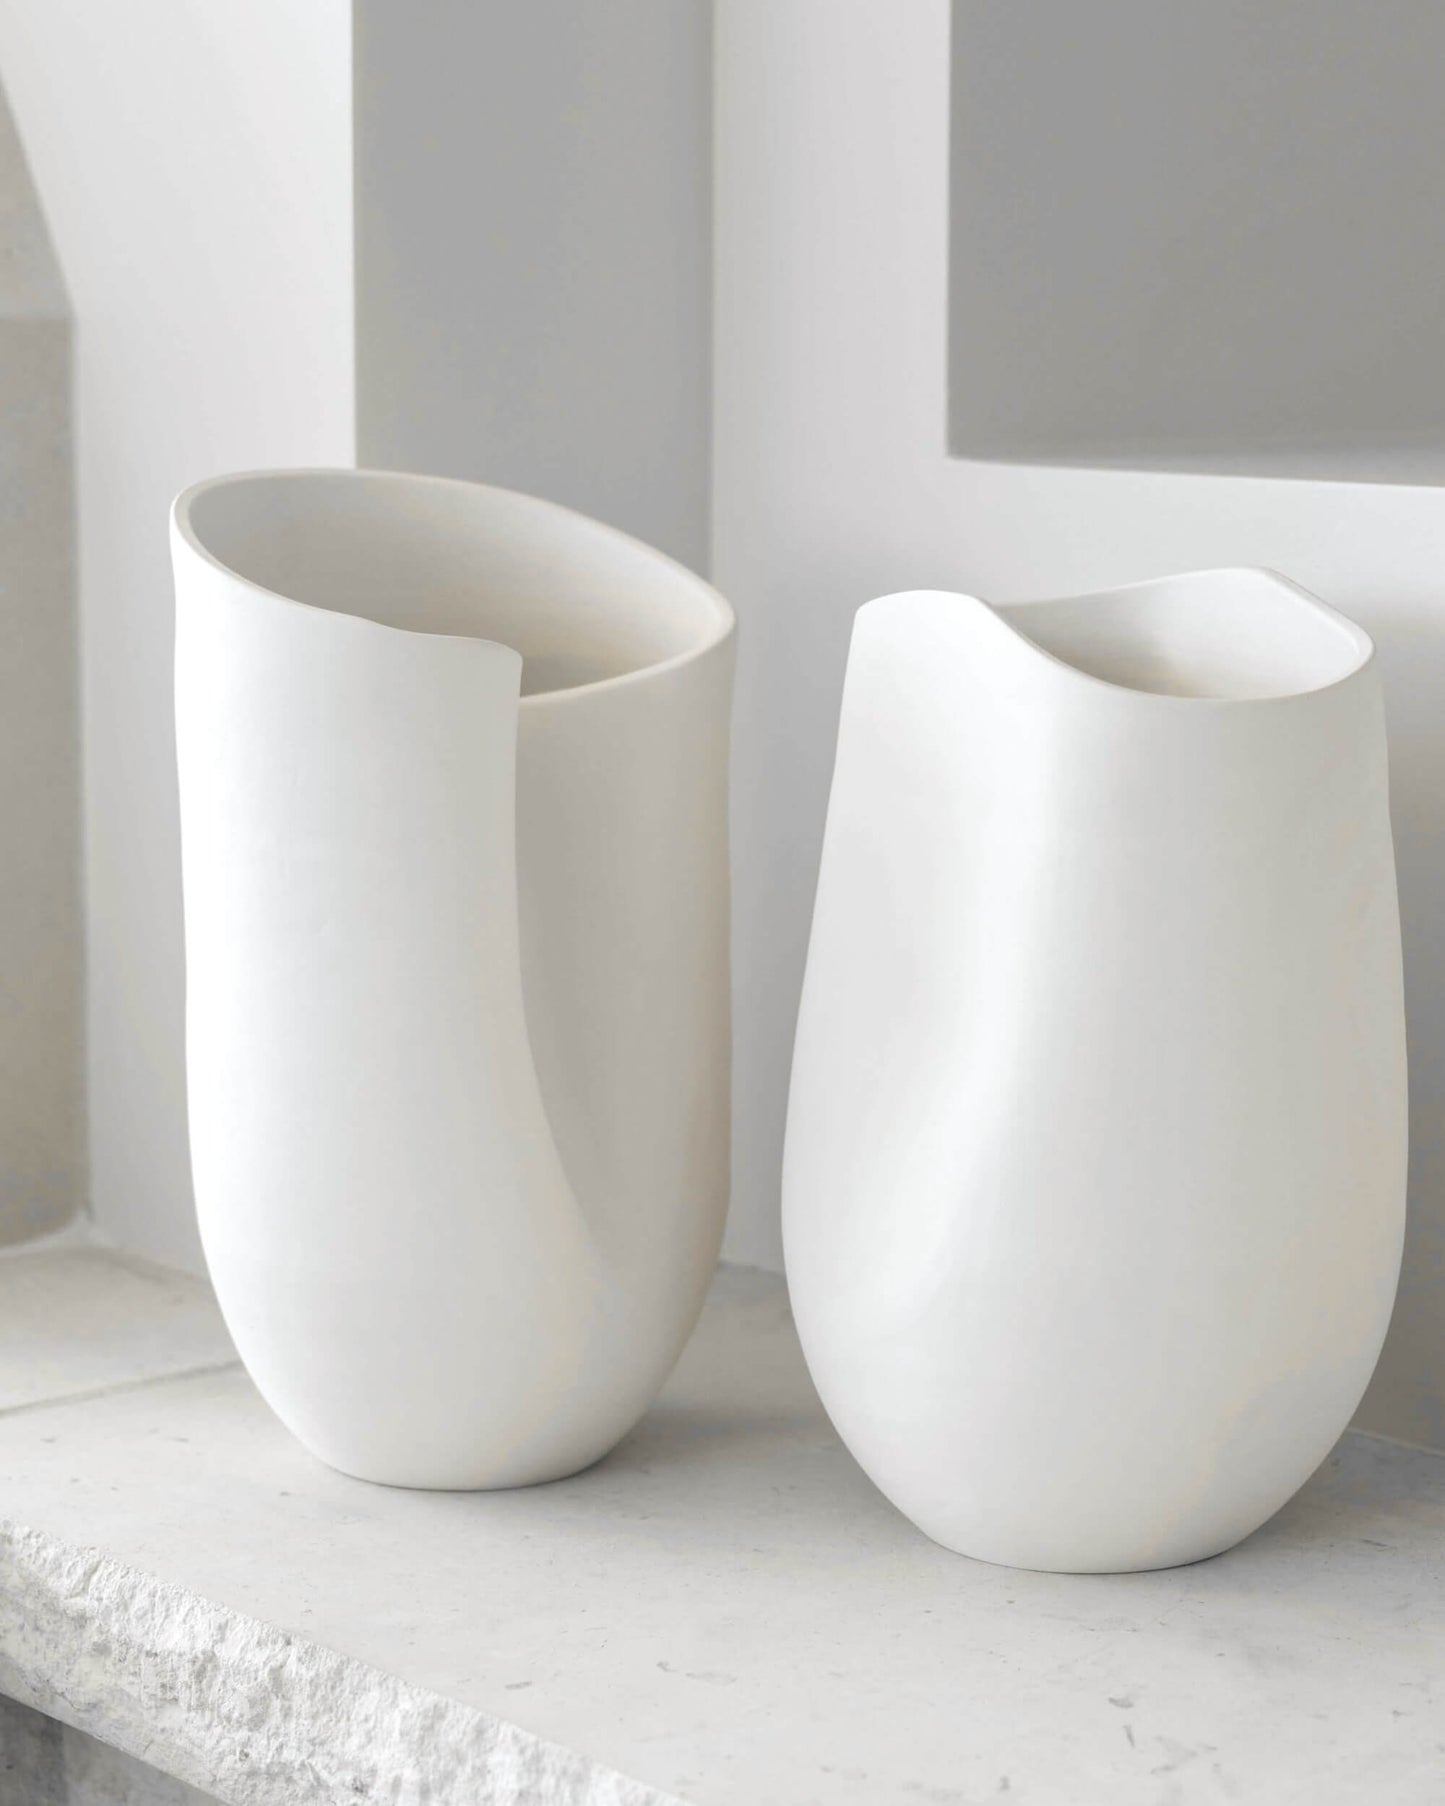 
                  
                    Large and Medium Zoya Terracotta Vases by Fairkind styled on stone mantle.
                  
                